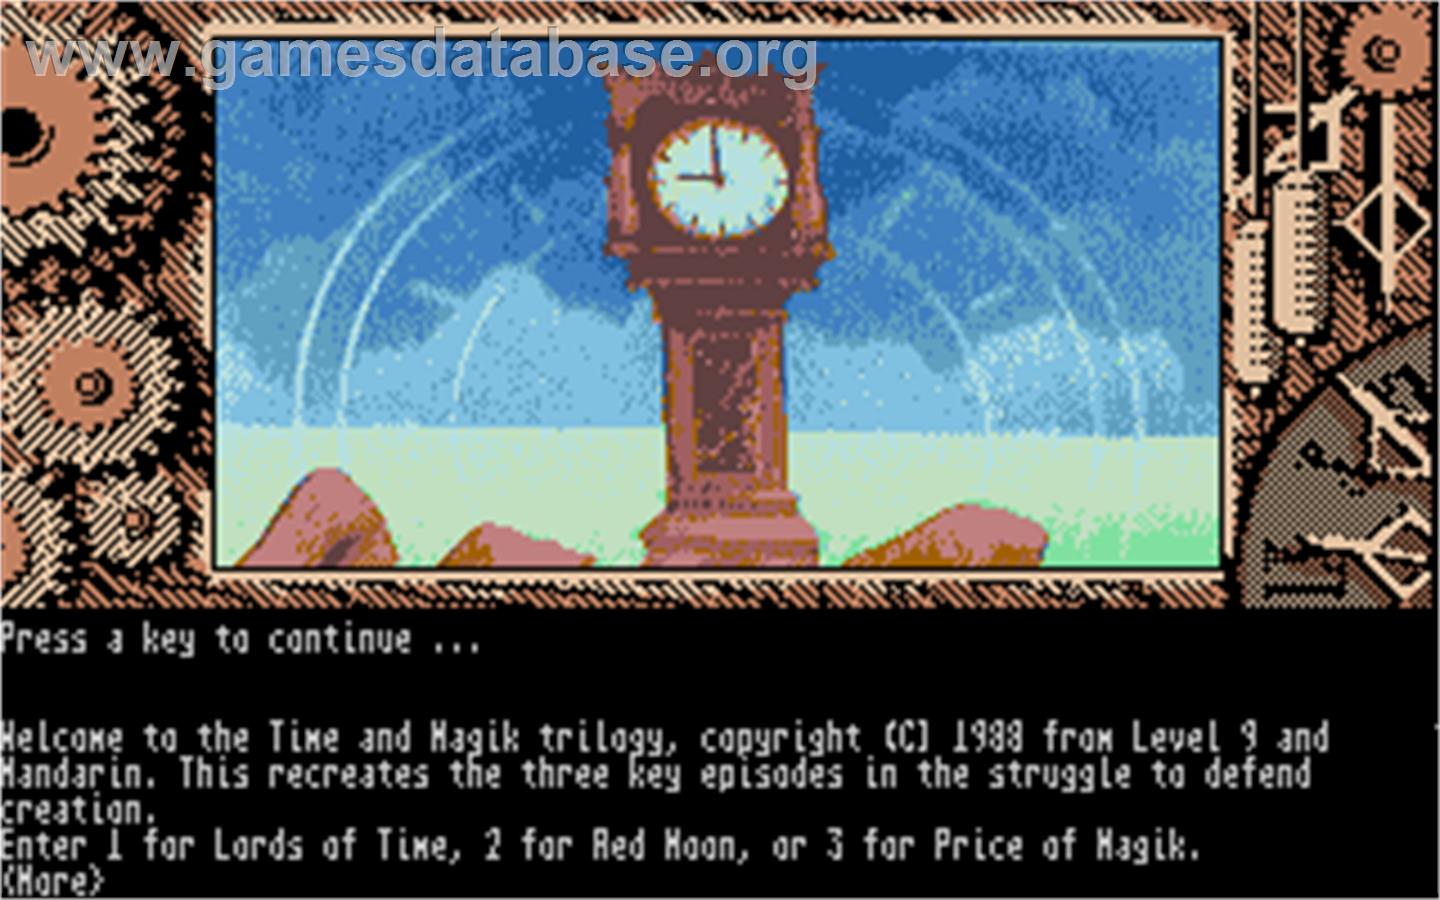 Time and Magik: The Trilogy - Atari ST - Artwork - In Game